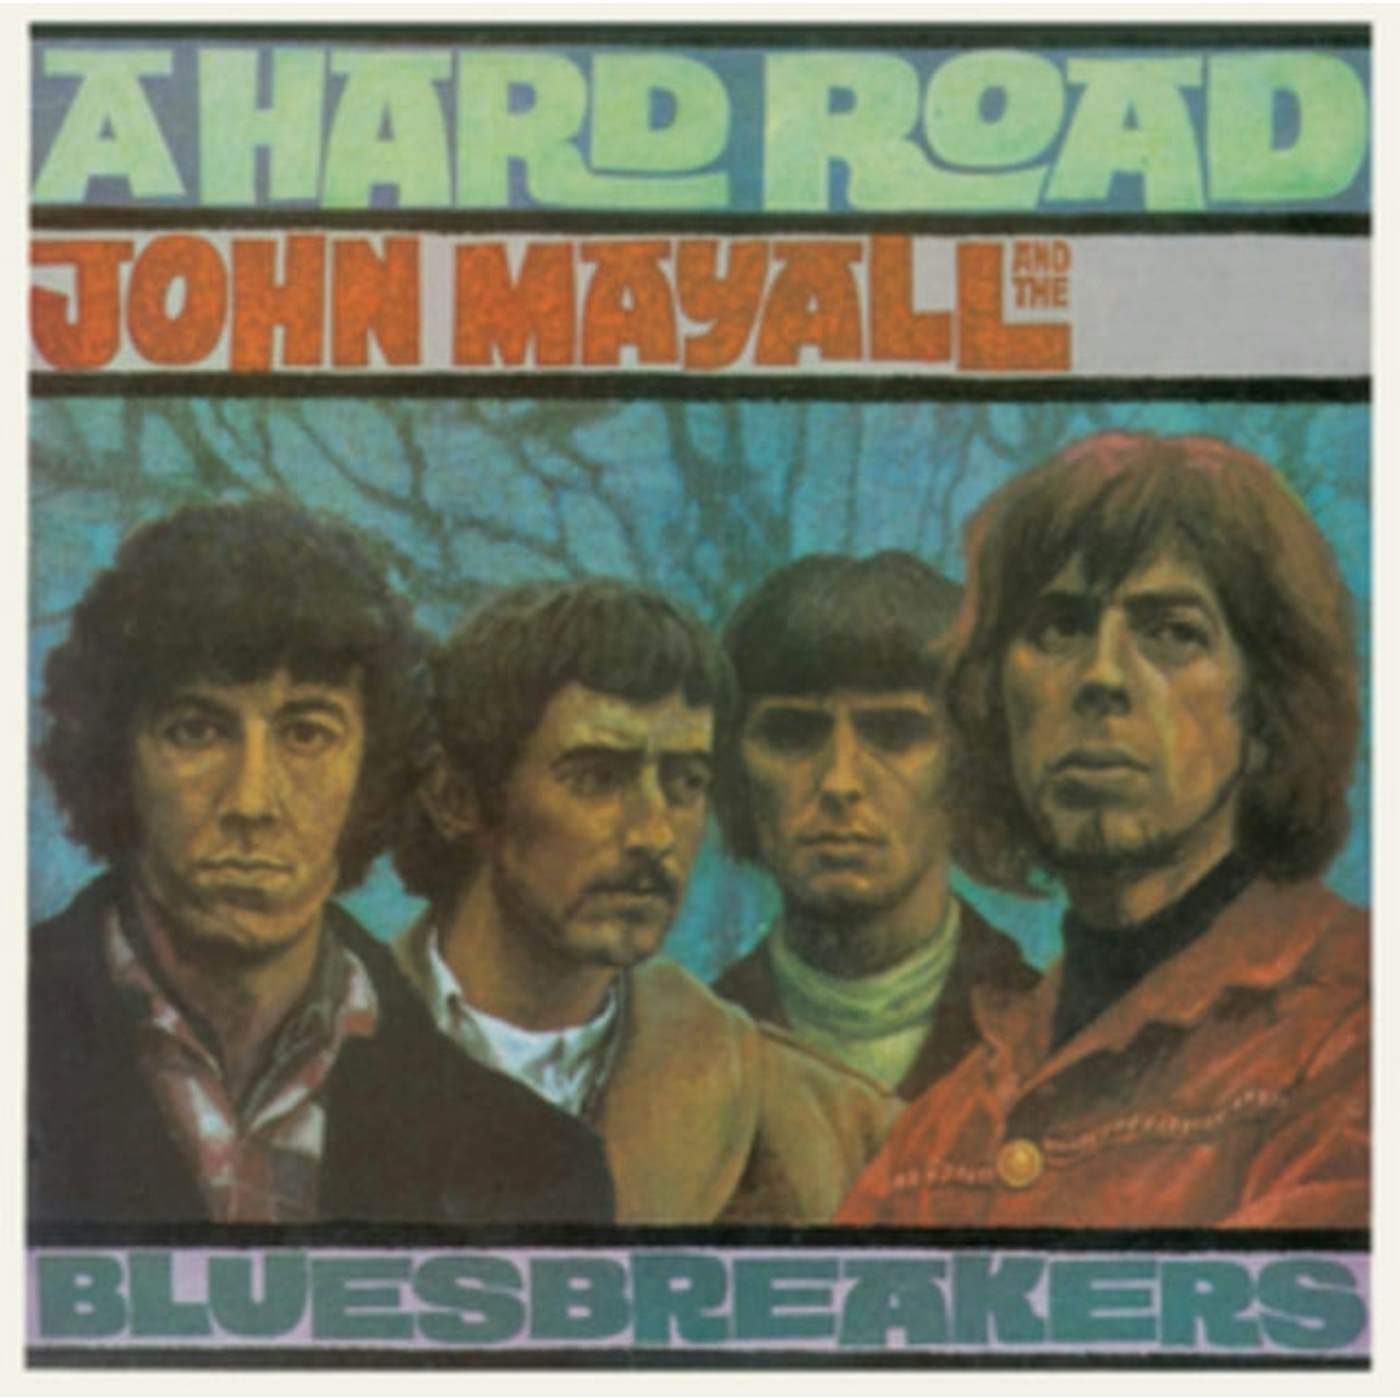 John Mayall & The Bluesbreakers CD - A Hard Road